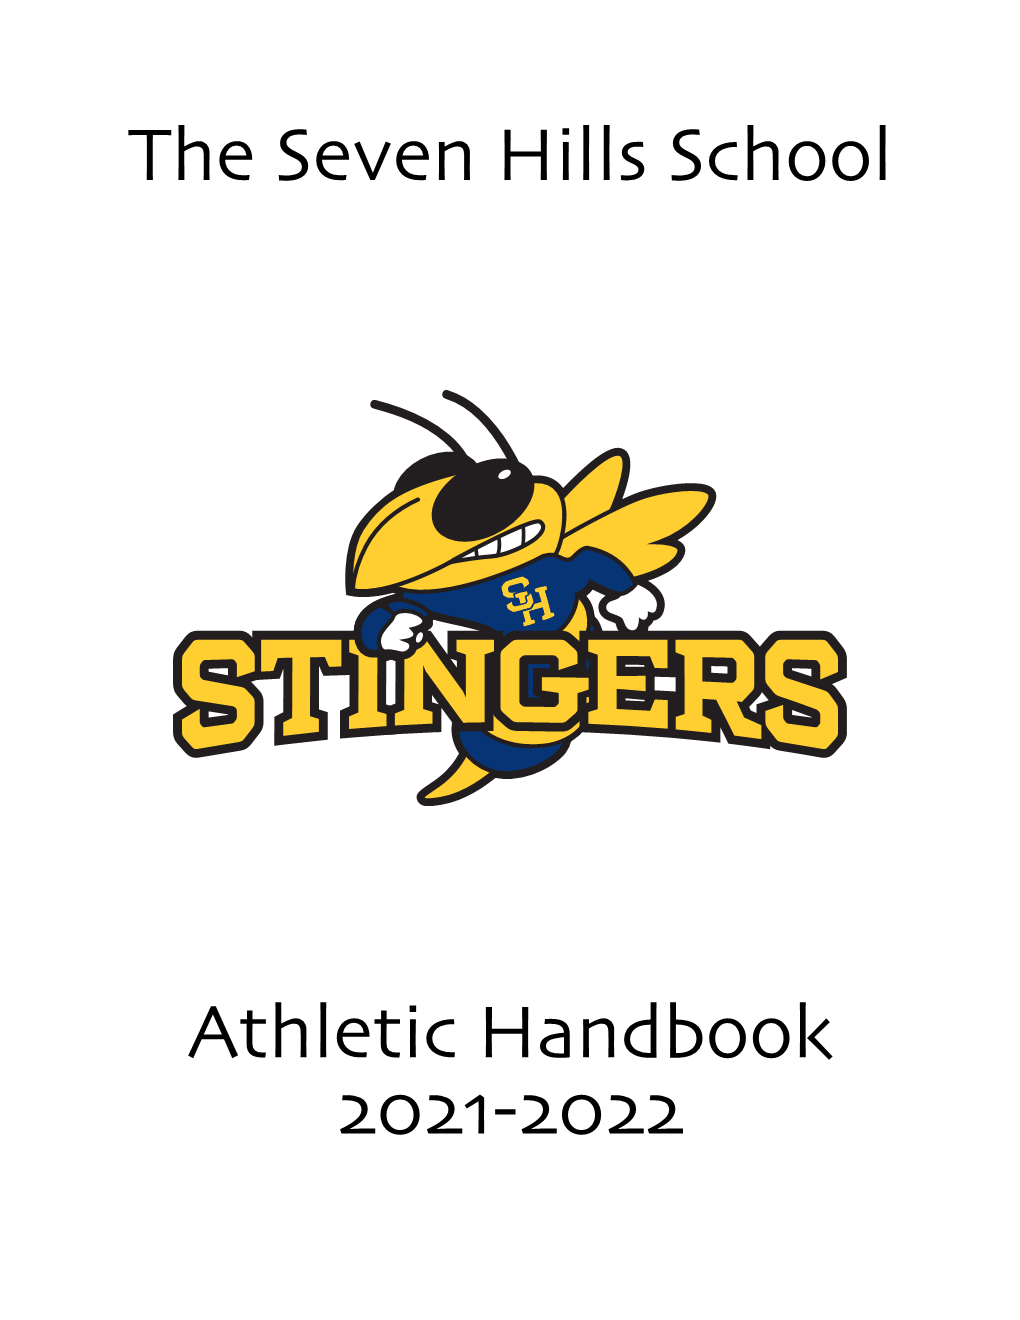 The Seven Hills School Athletic Handbook 2021-2022